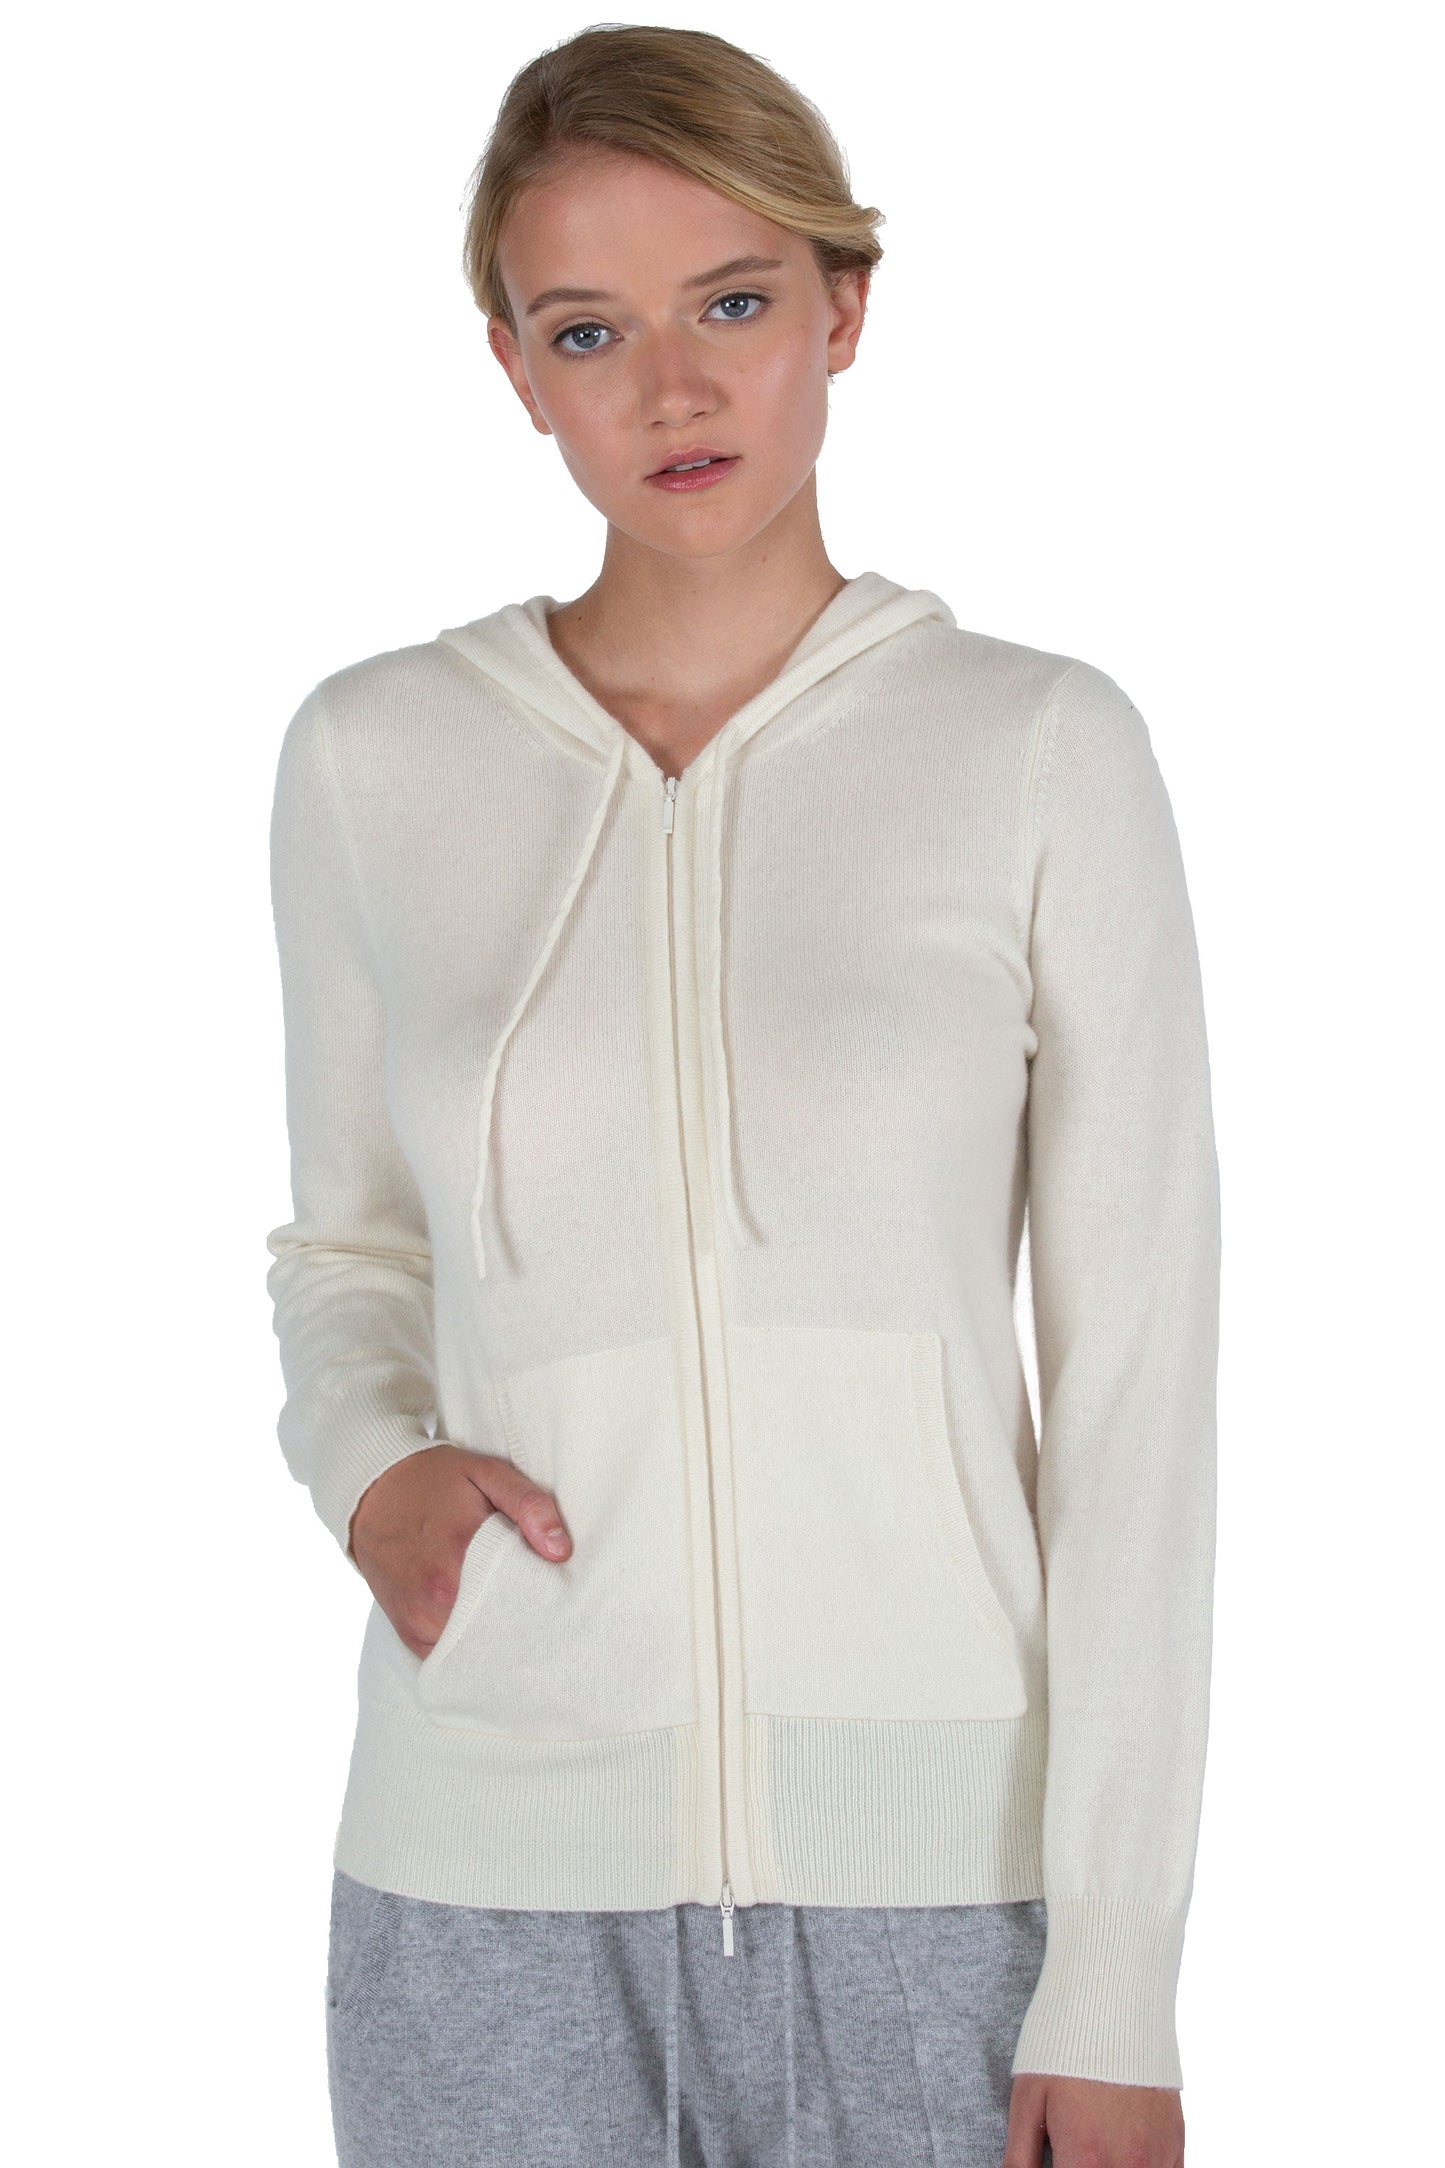 JENNIE LIU Women's 100% Pure Cashmere Long Sleeve Zip Hoodie Cardigan Sweater